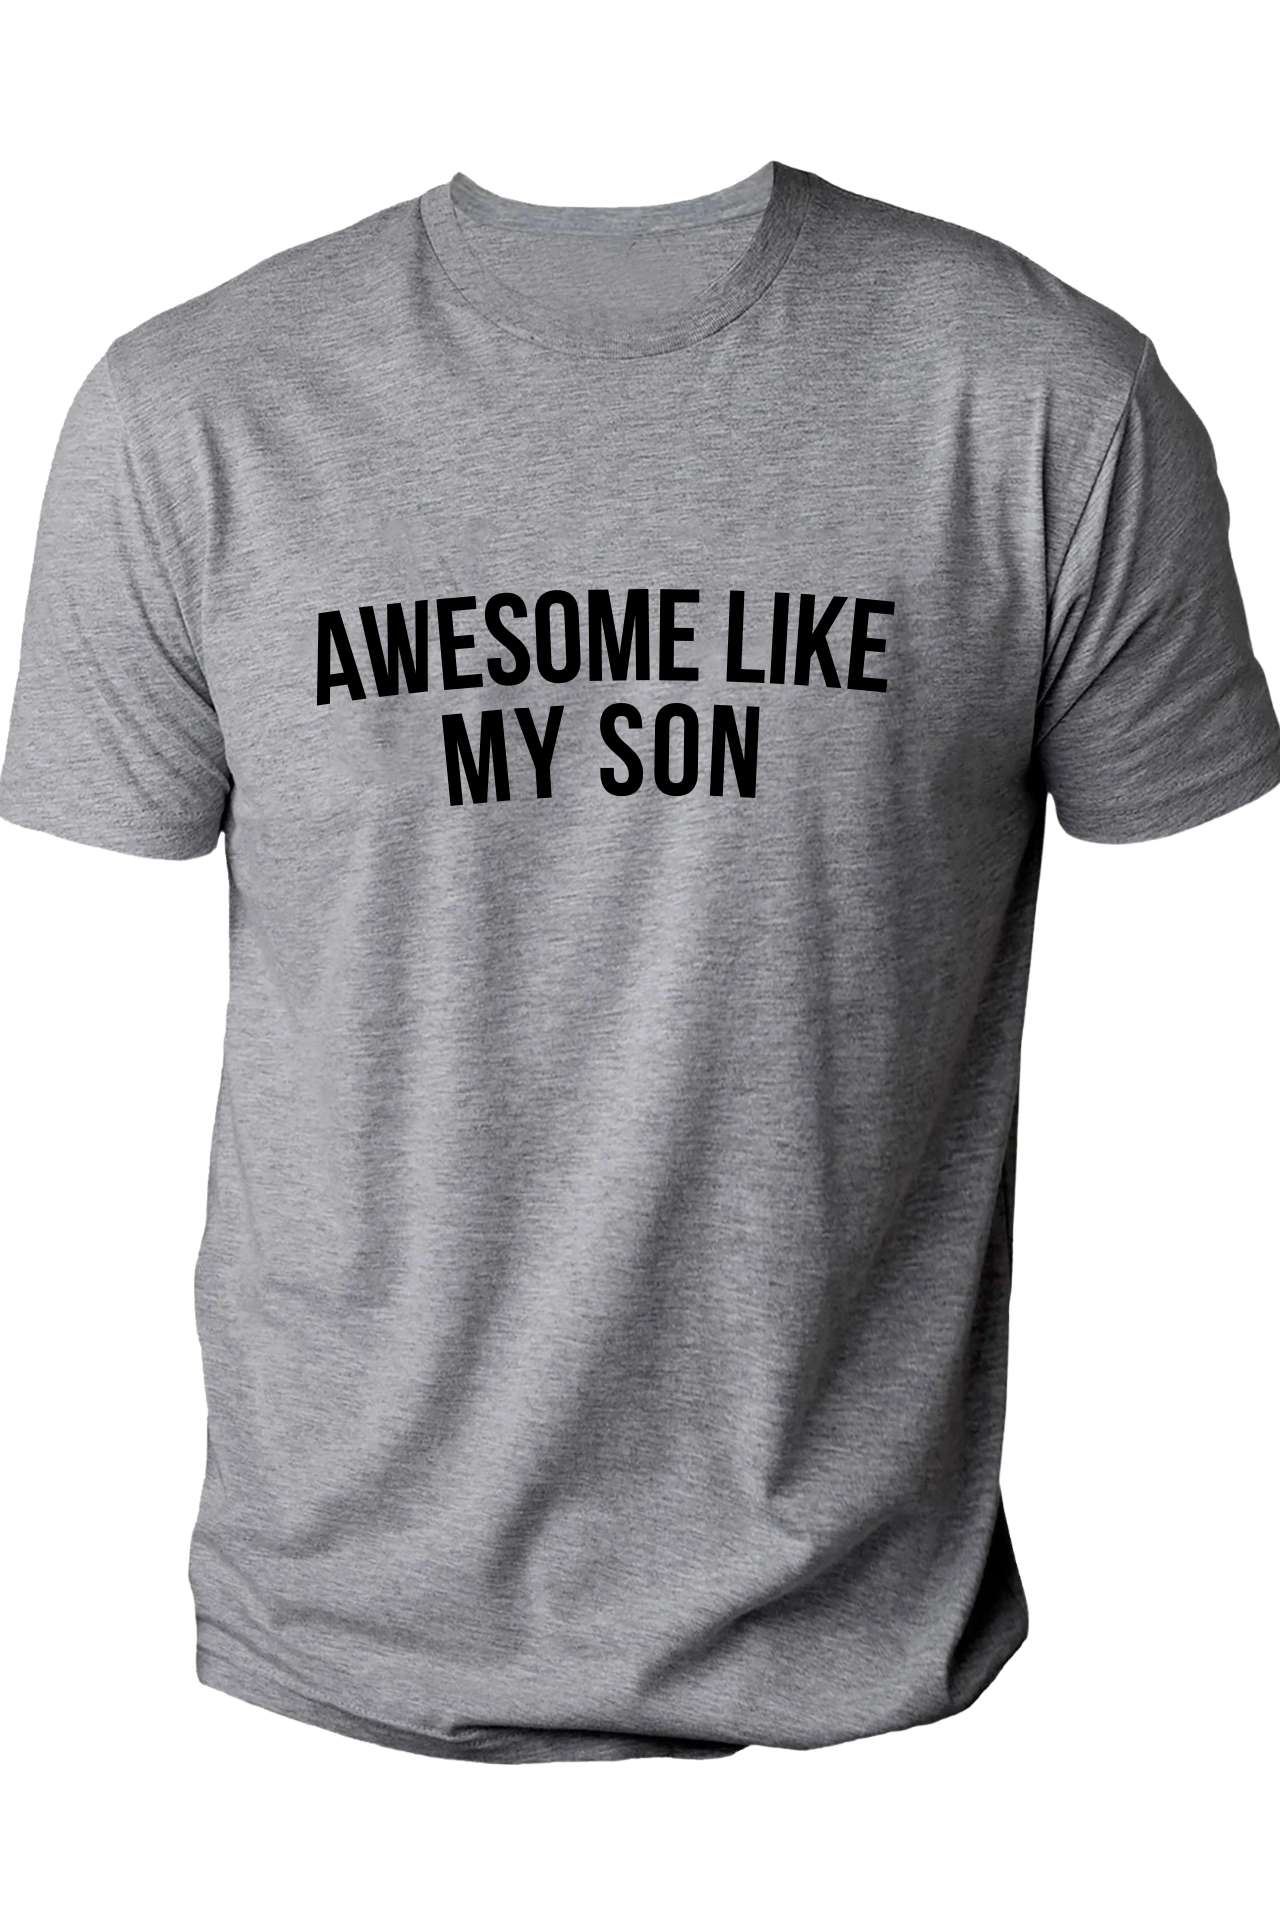 Awesome like my son, Awesome like my daughter, Awesome Like My Kids Tshirt